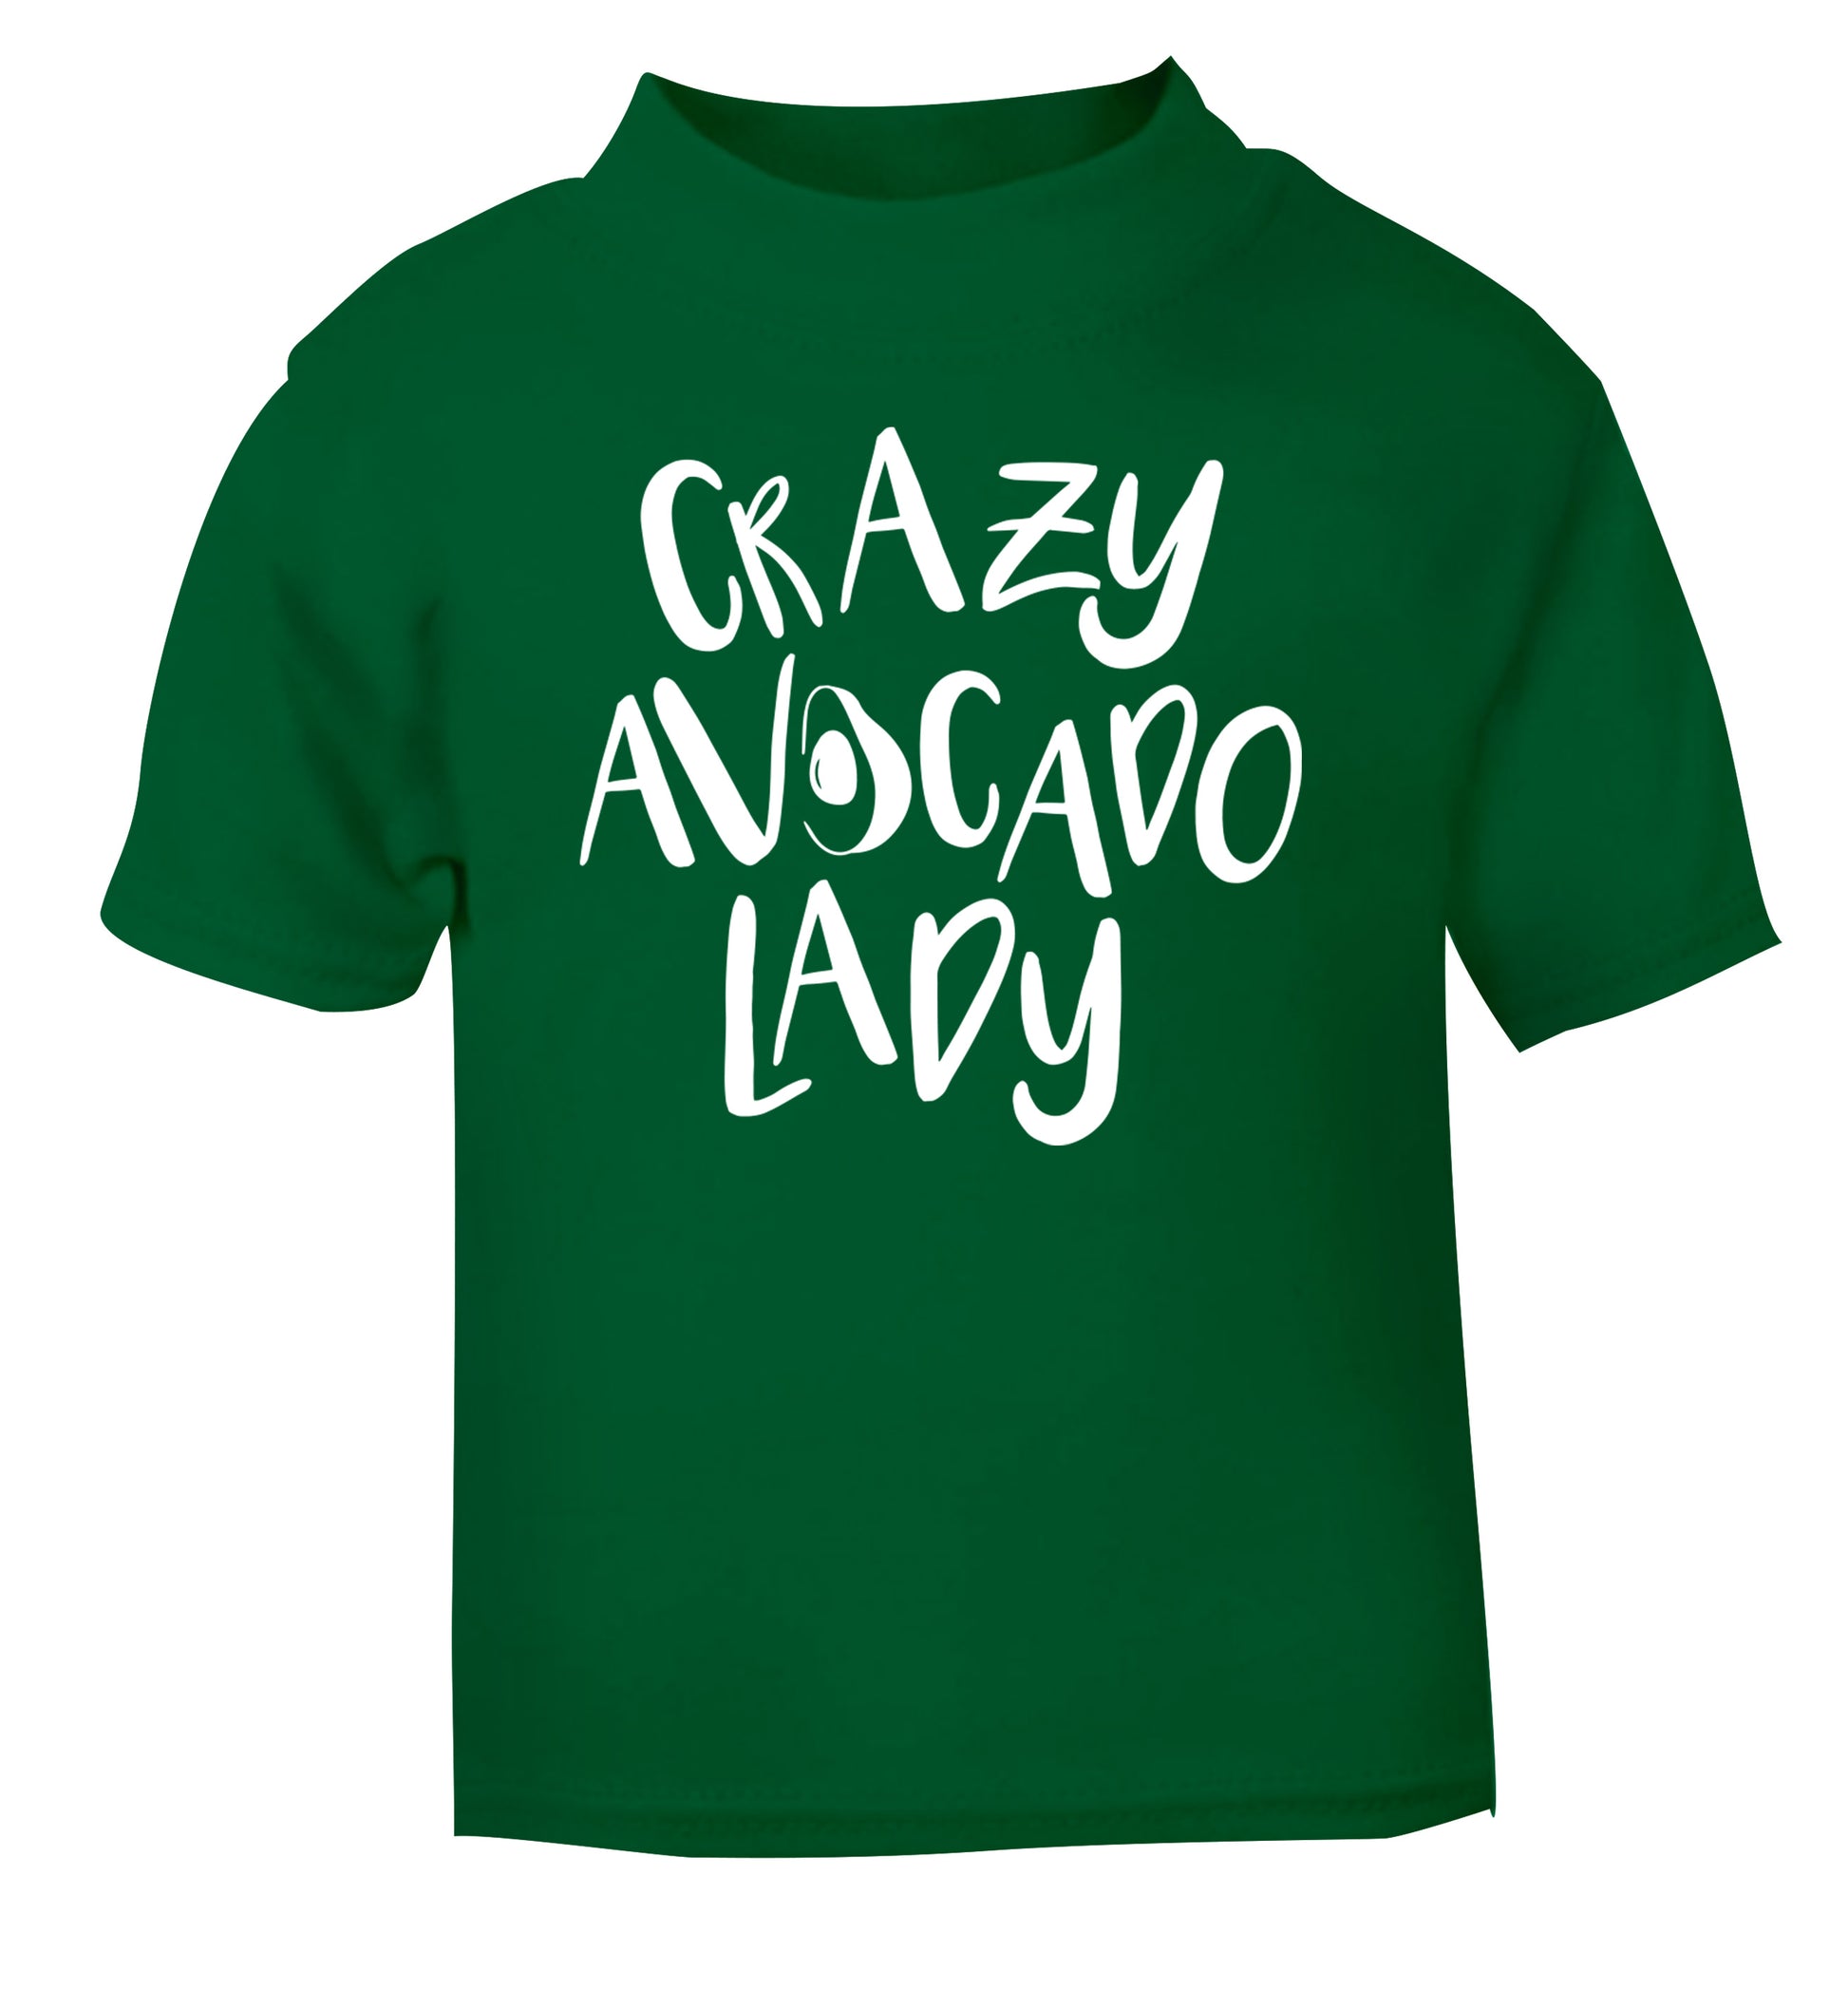 Crazy avocado lady green Baby Toddler Tshirt 2 Years